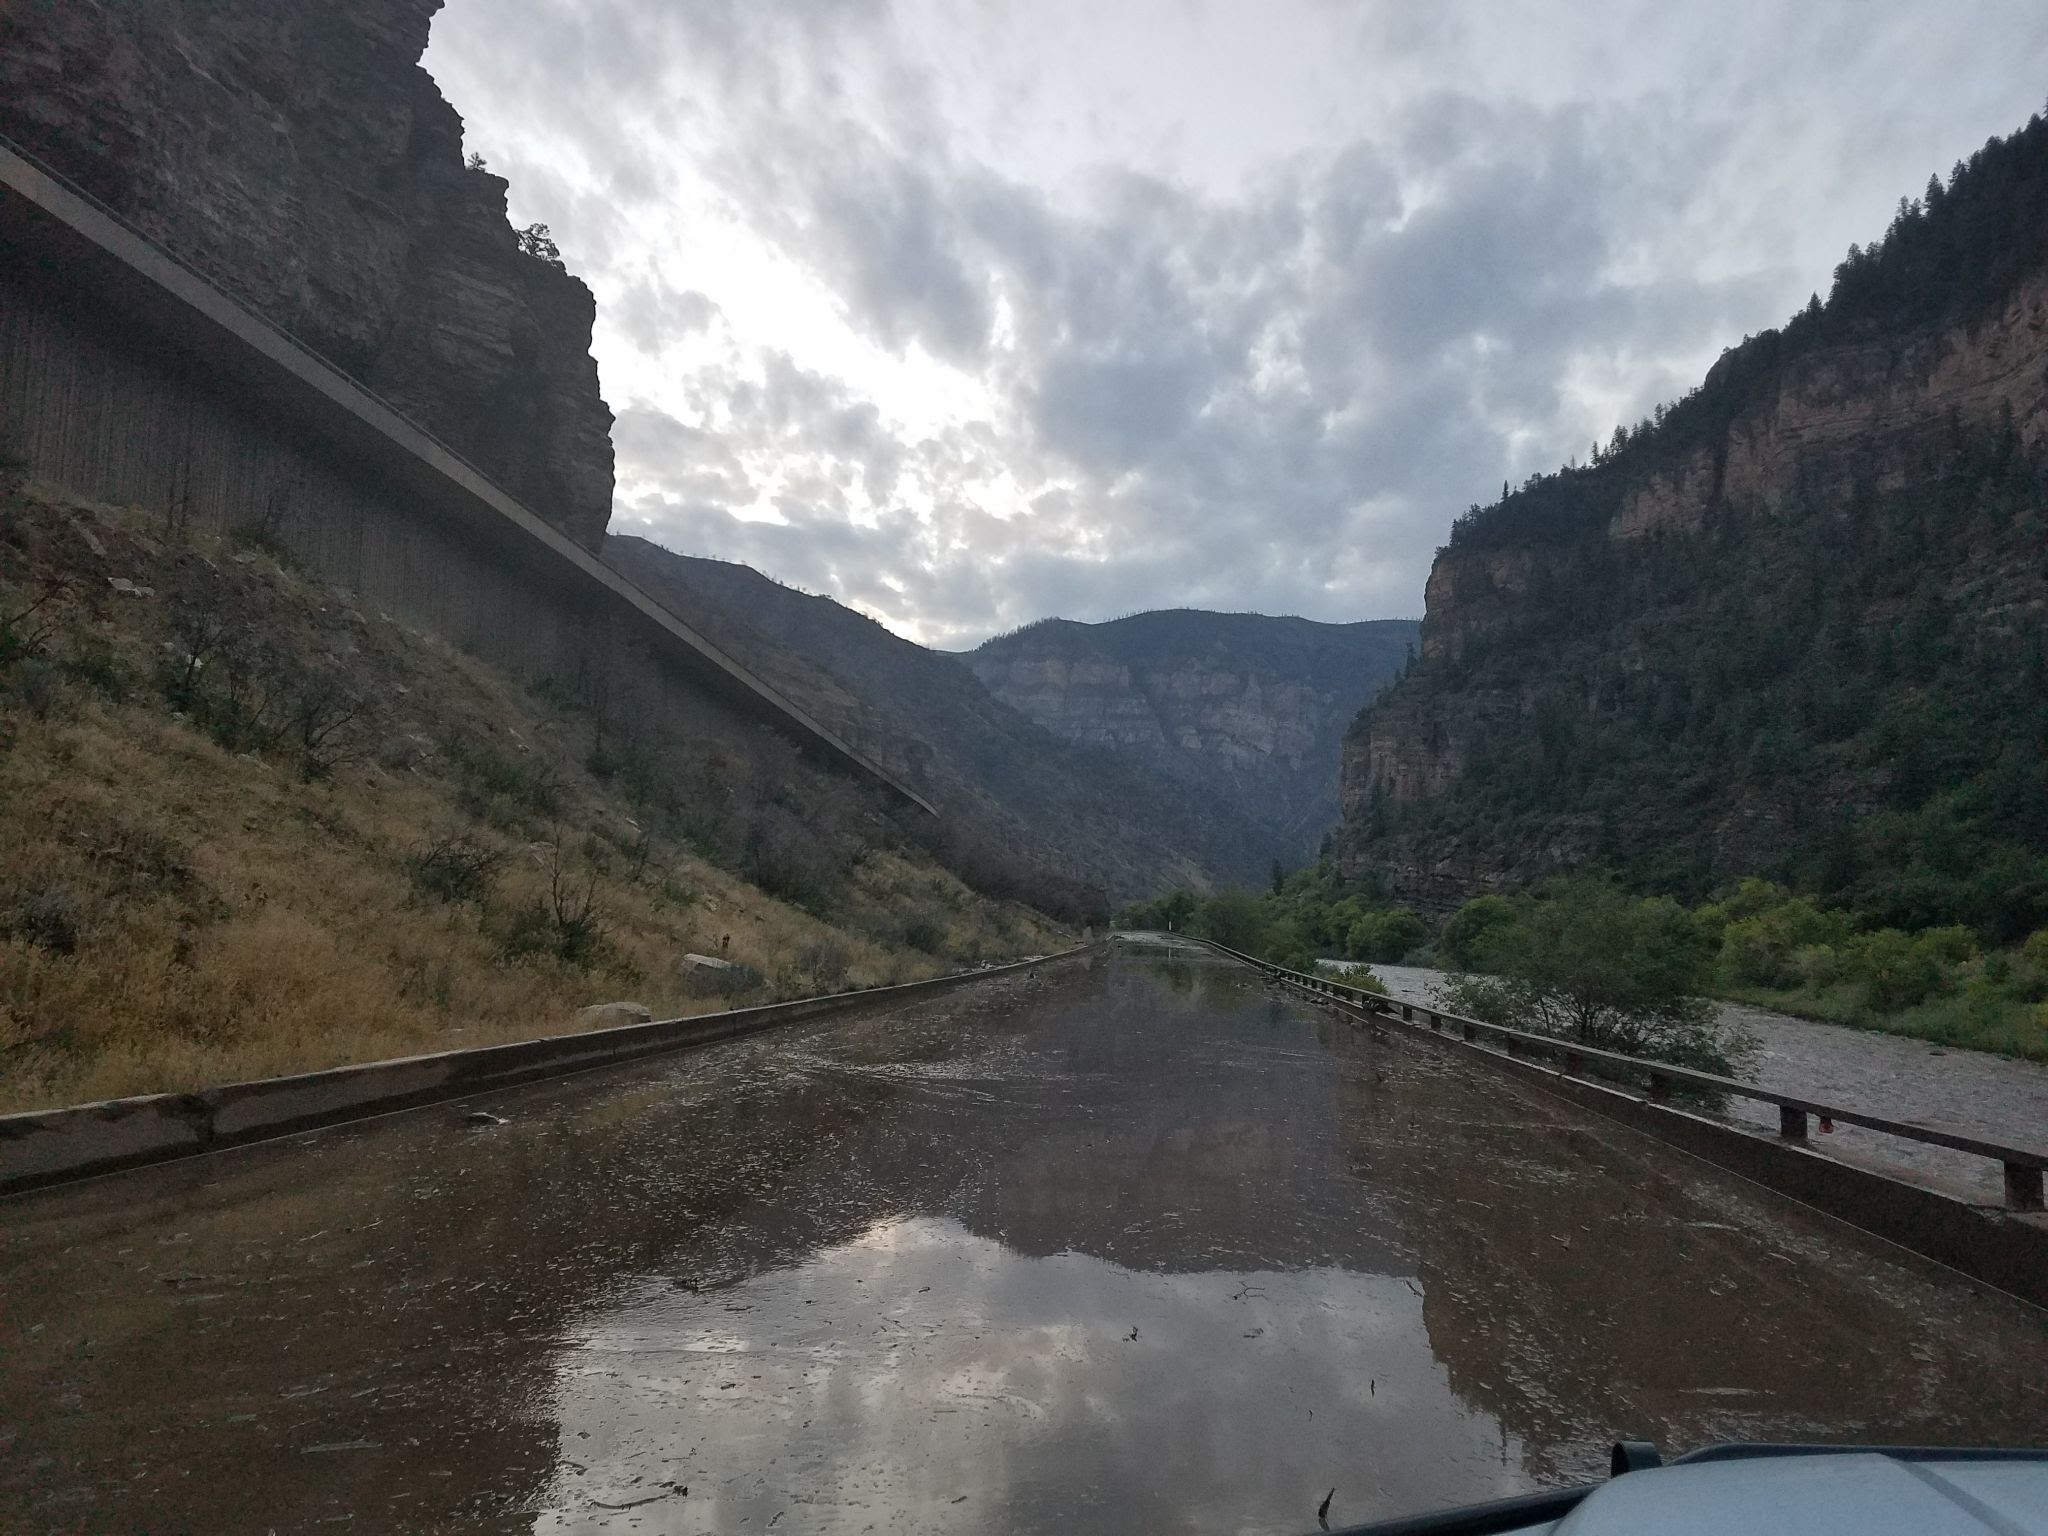 Glenwood Canyon mudslide water on the road detail image